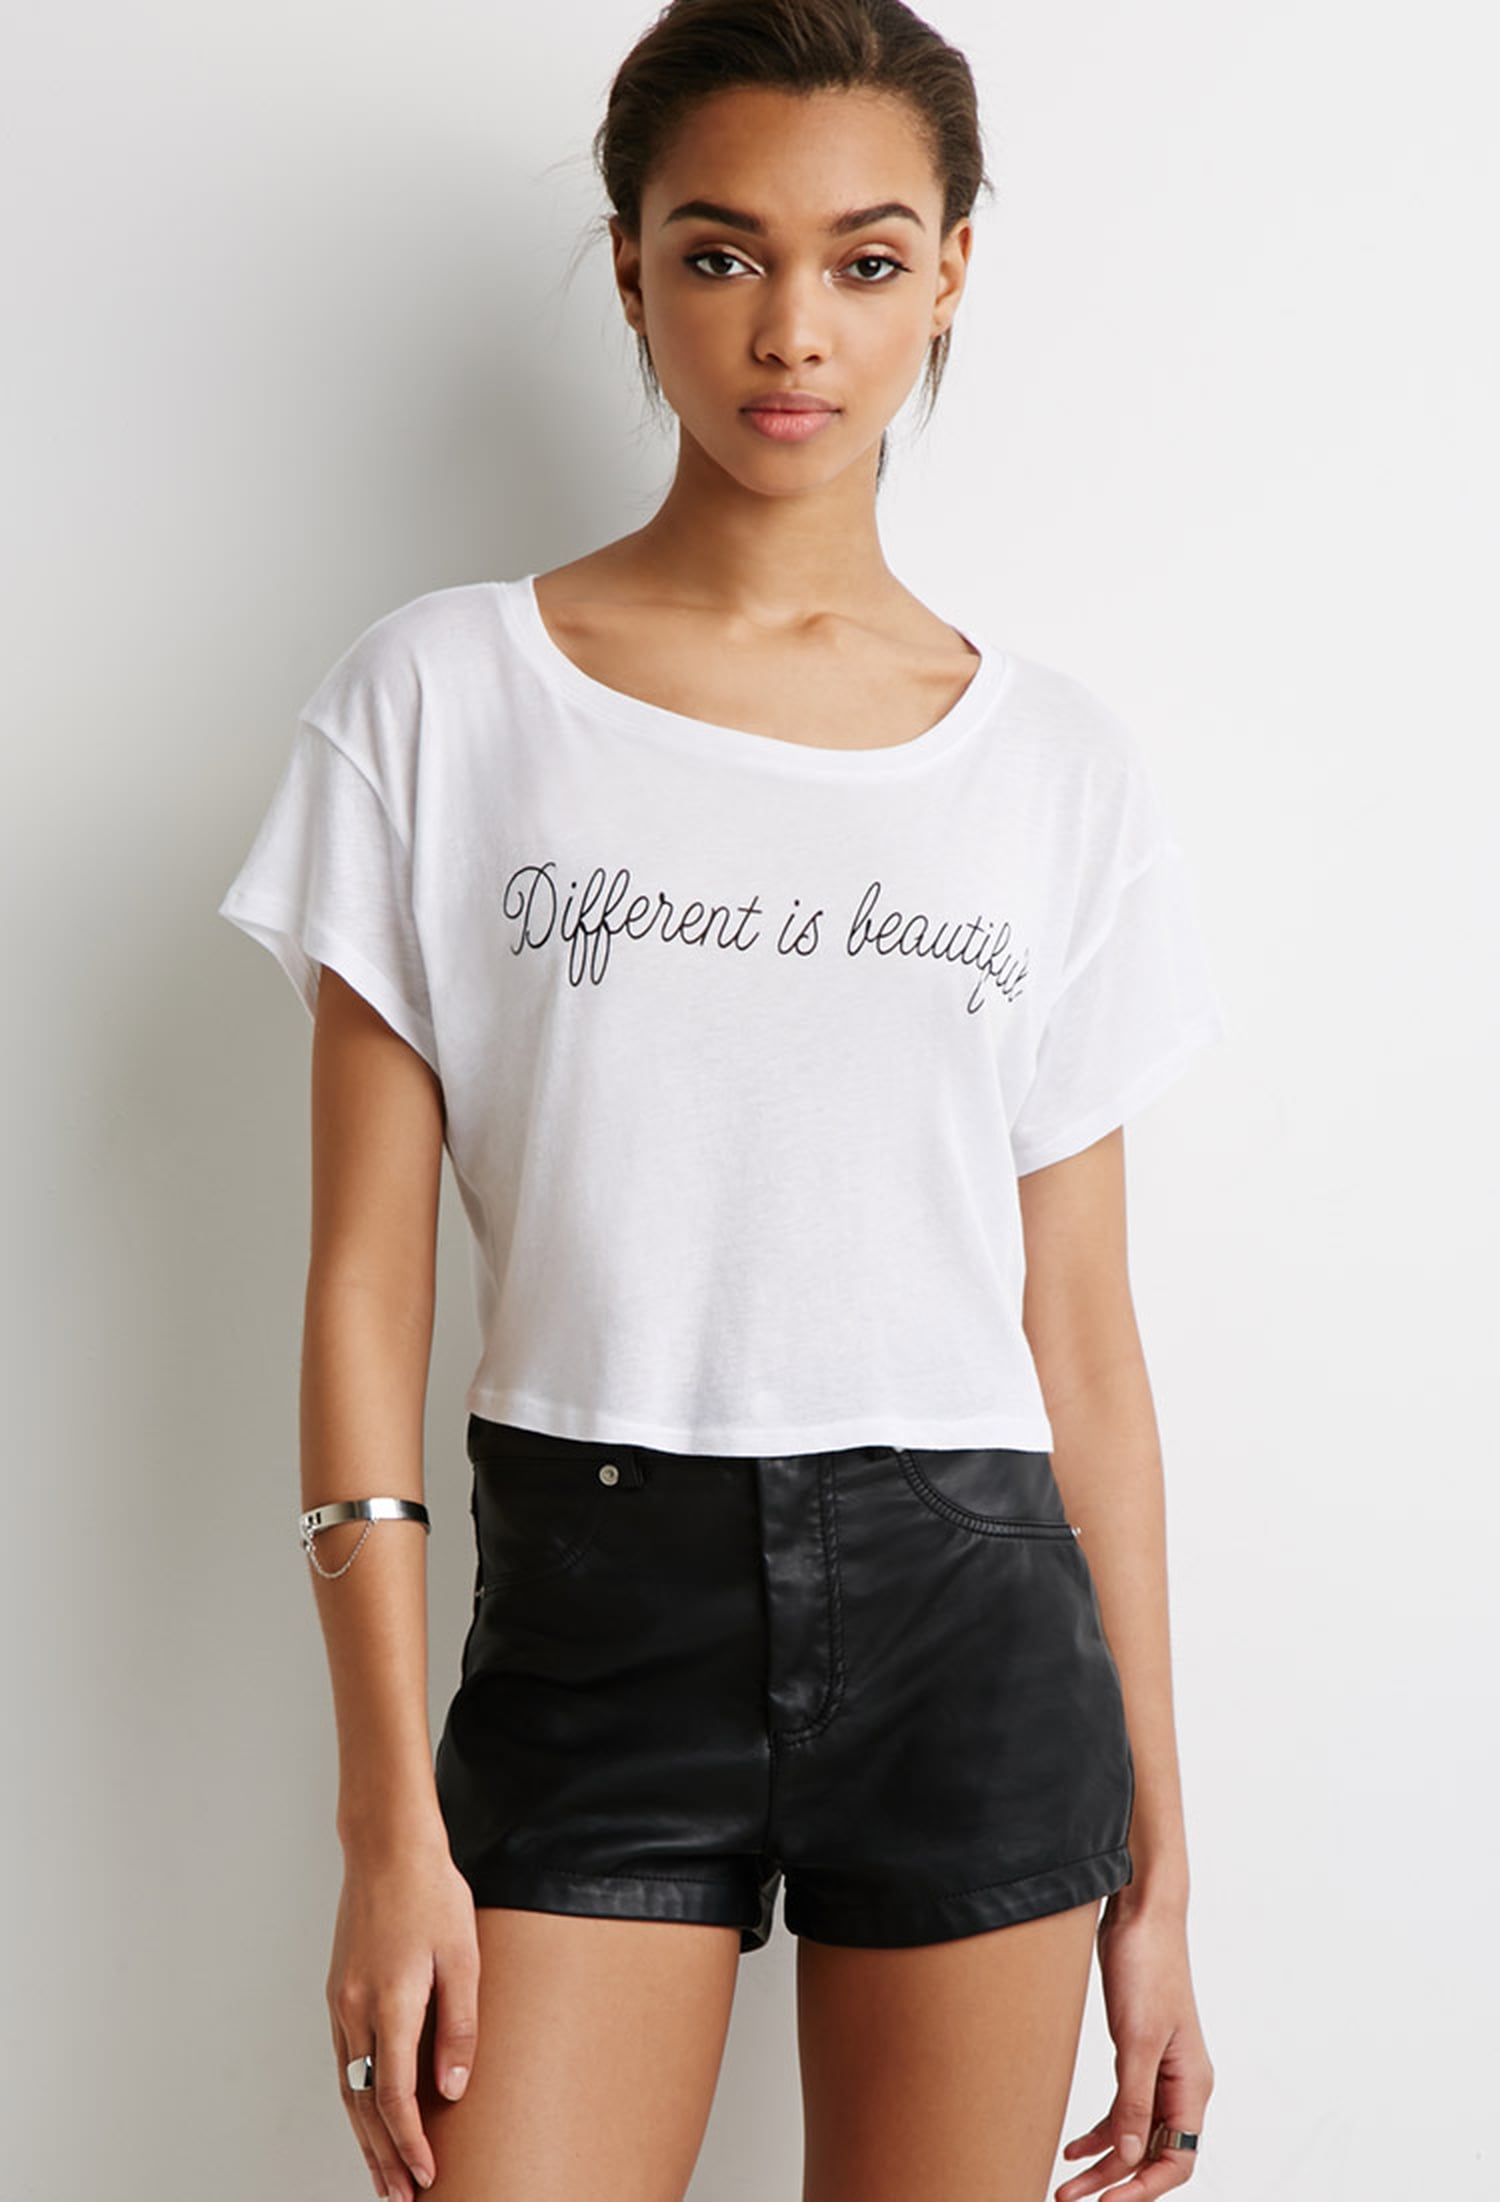 Beyonce and Jay Z Statement T-Shirts | POPSUGAR Fashion